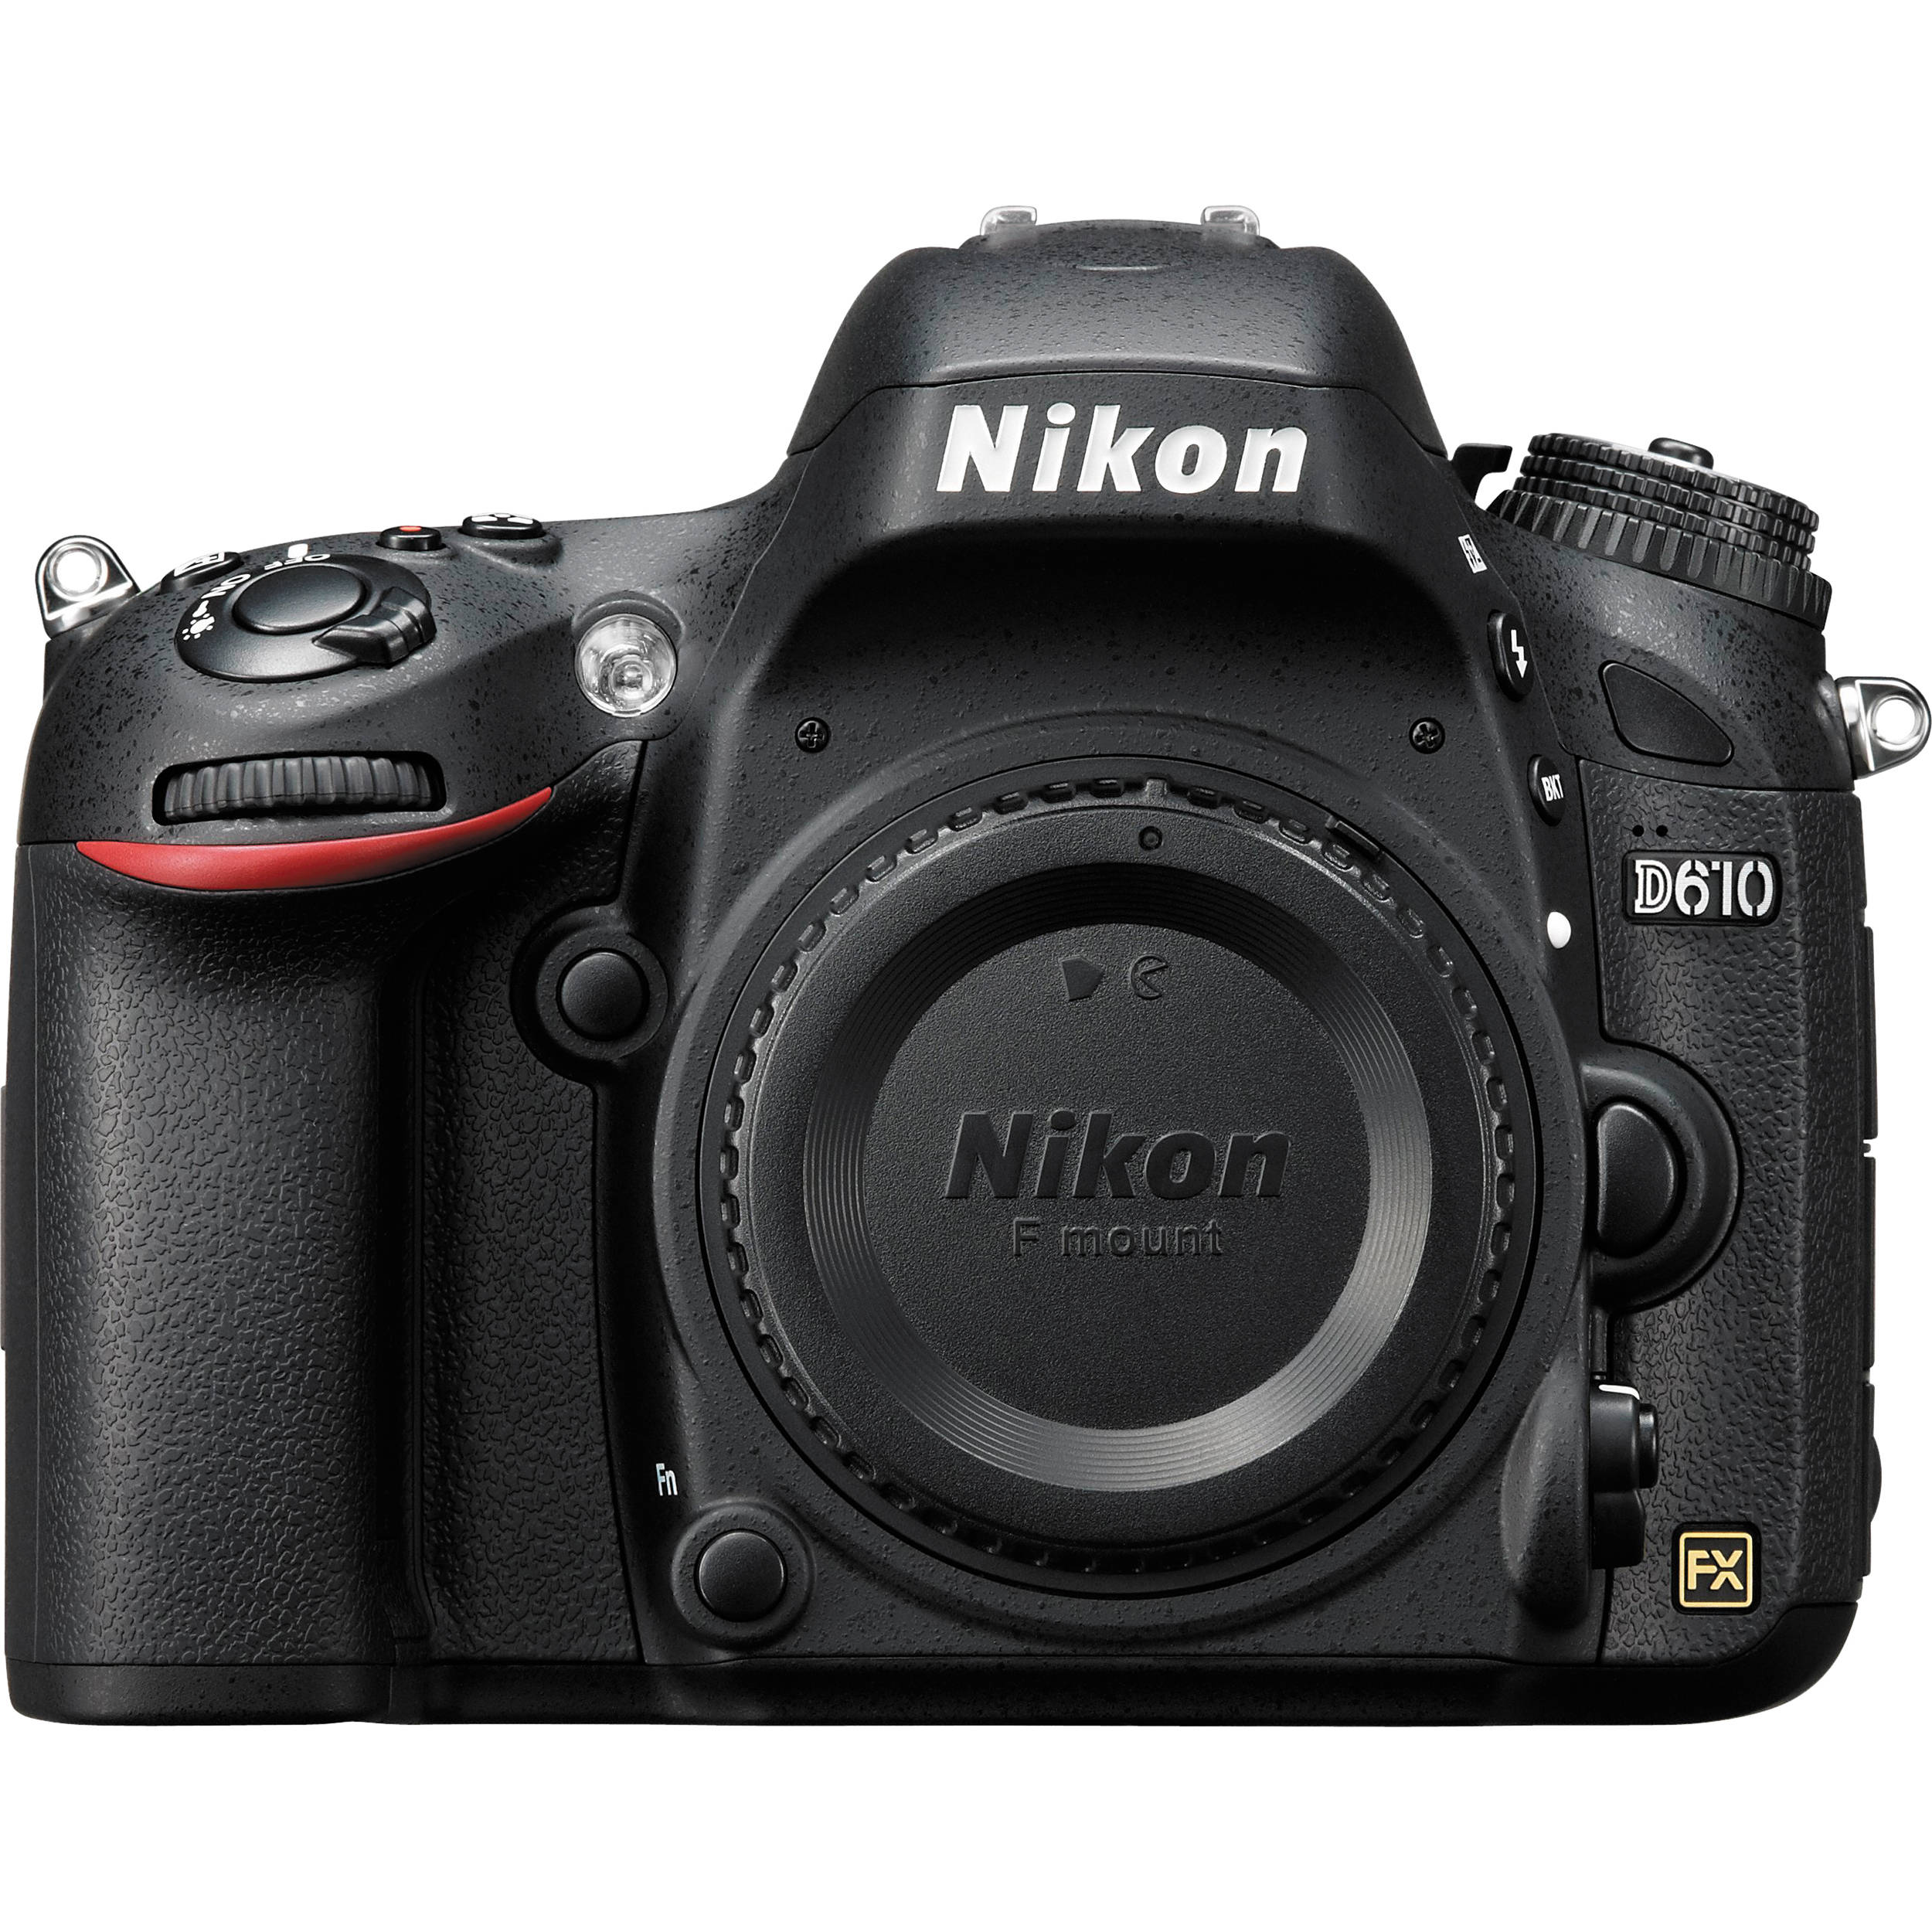 Nikon D610 Media Markt